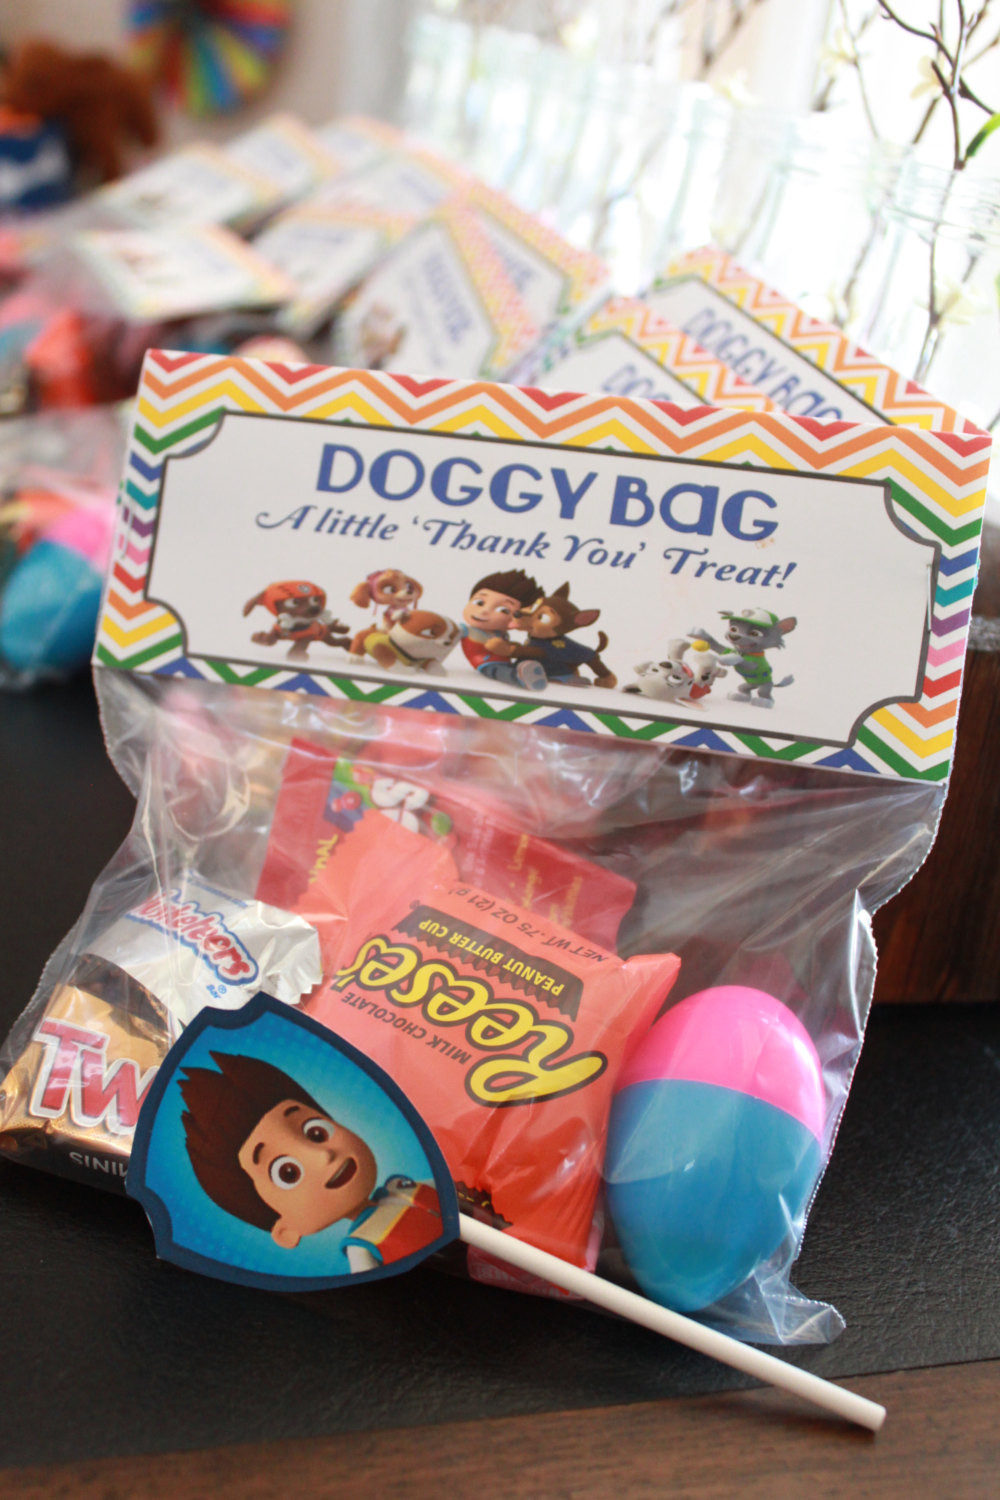 Birthday Party Treat Bag Ideas
 Paw Patrol Doggy Bag Treat Bag Topper